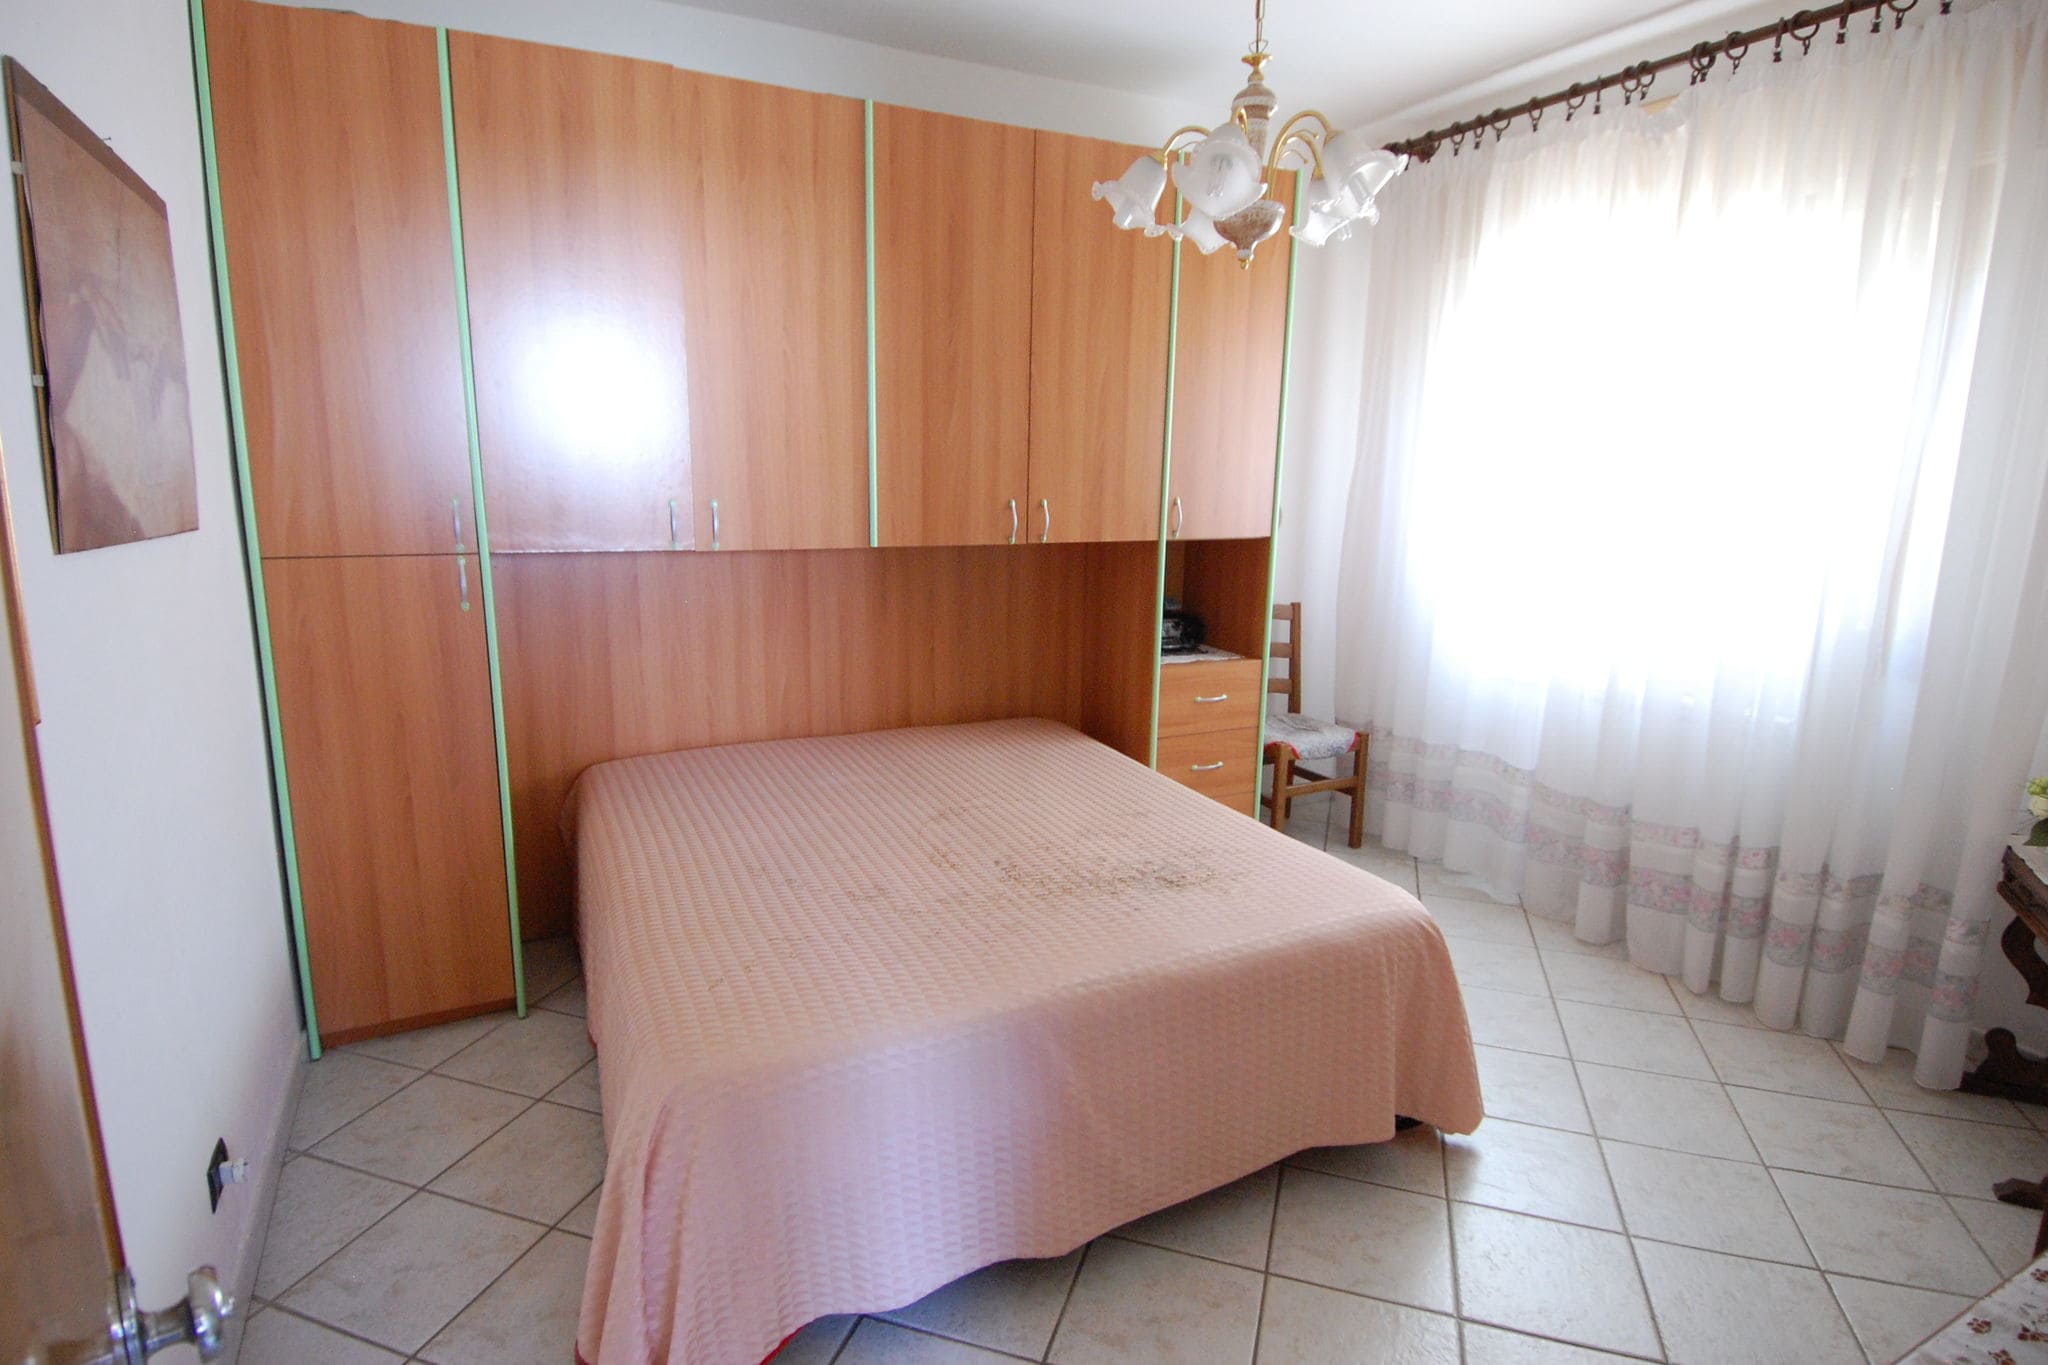 Ground floor apartment home in Rosolina Mare near Venice